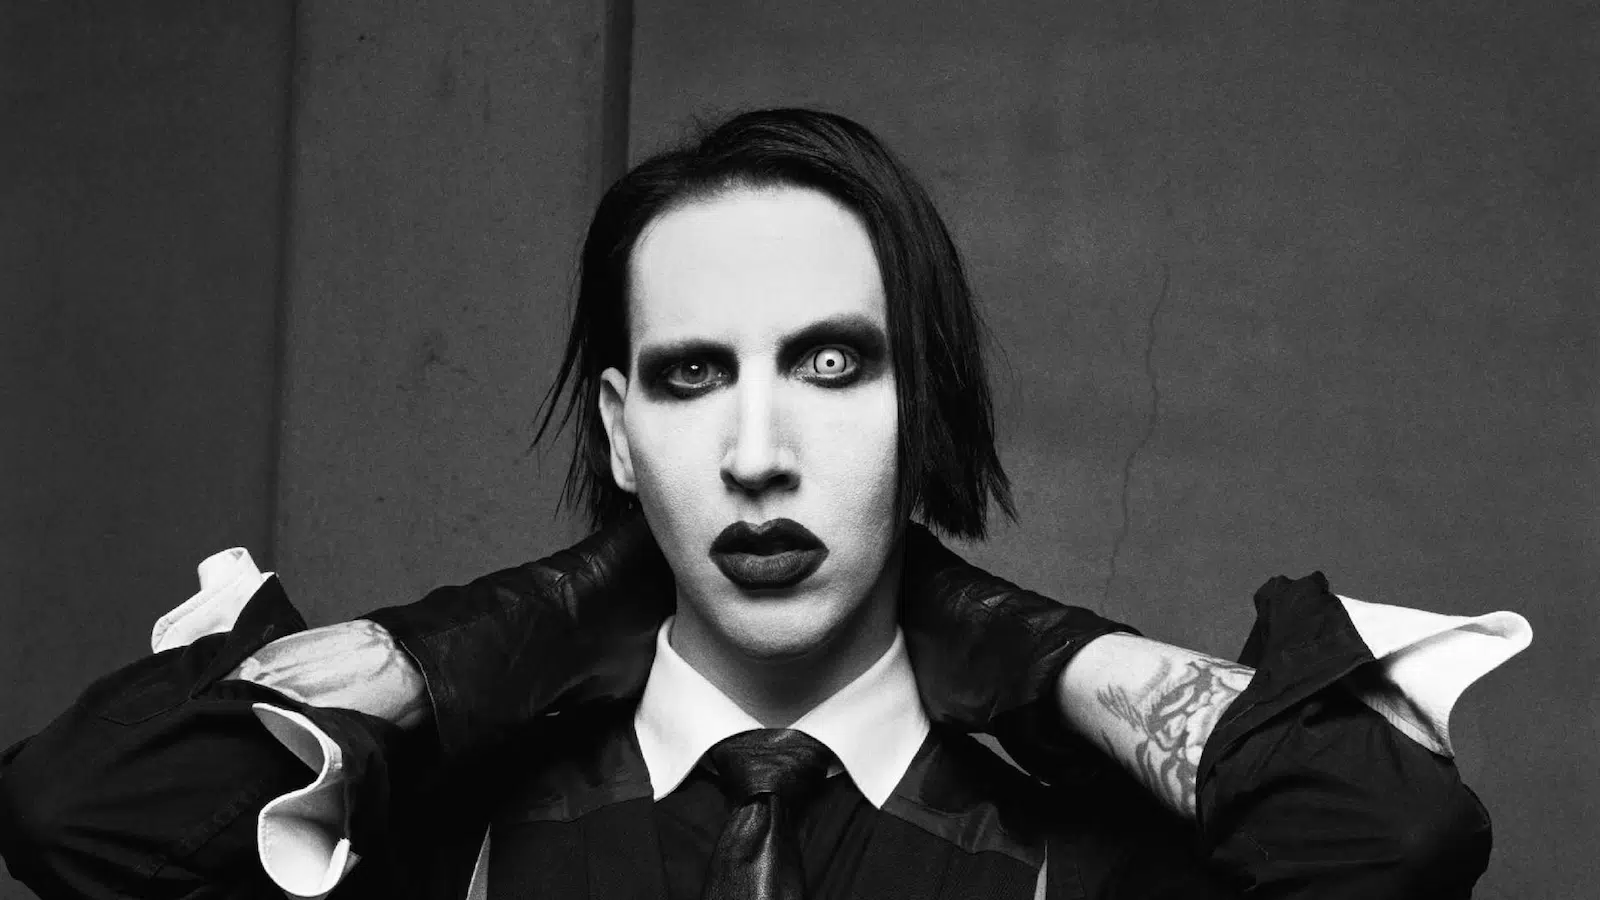 Good Job Mr.Manson